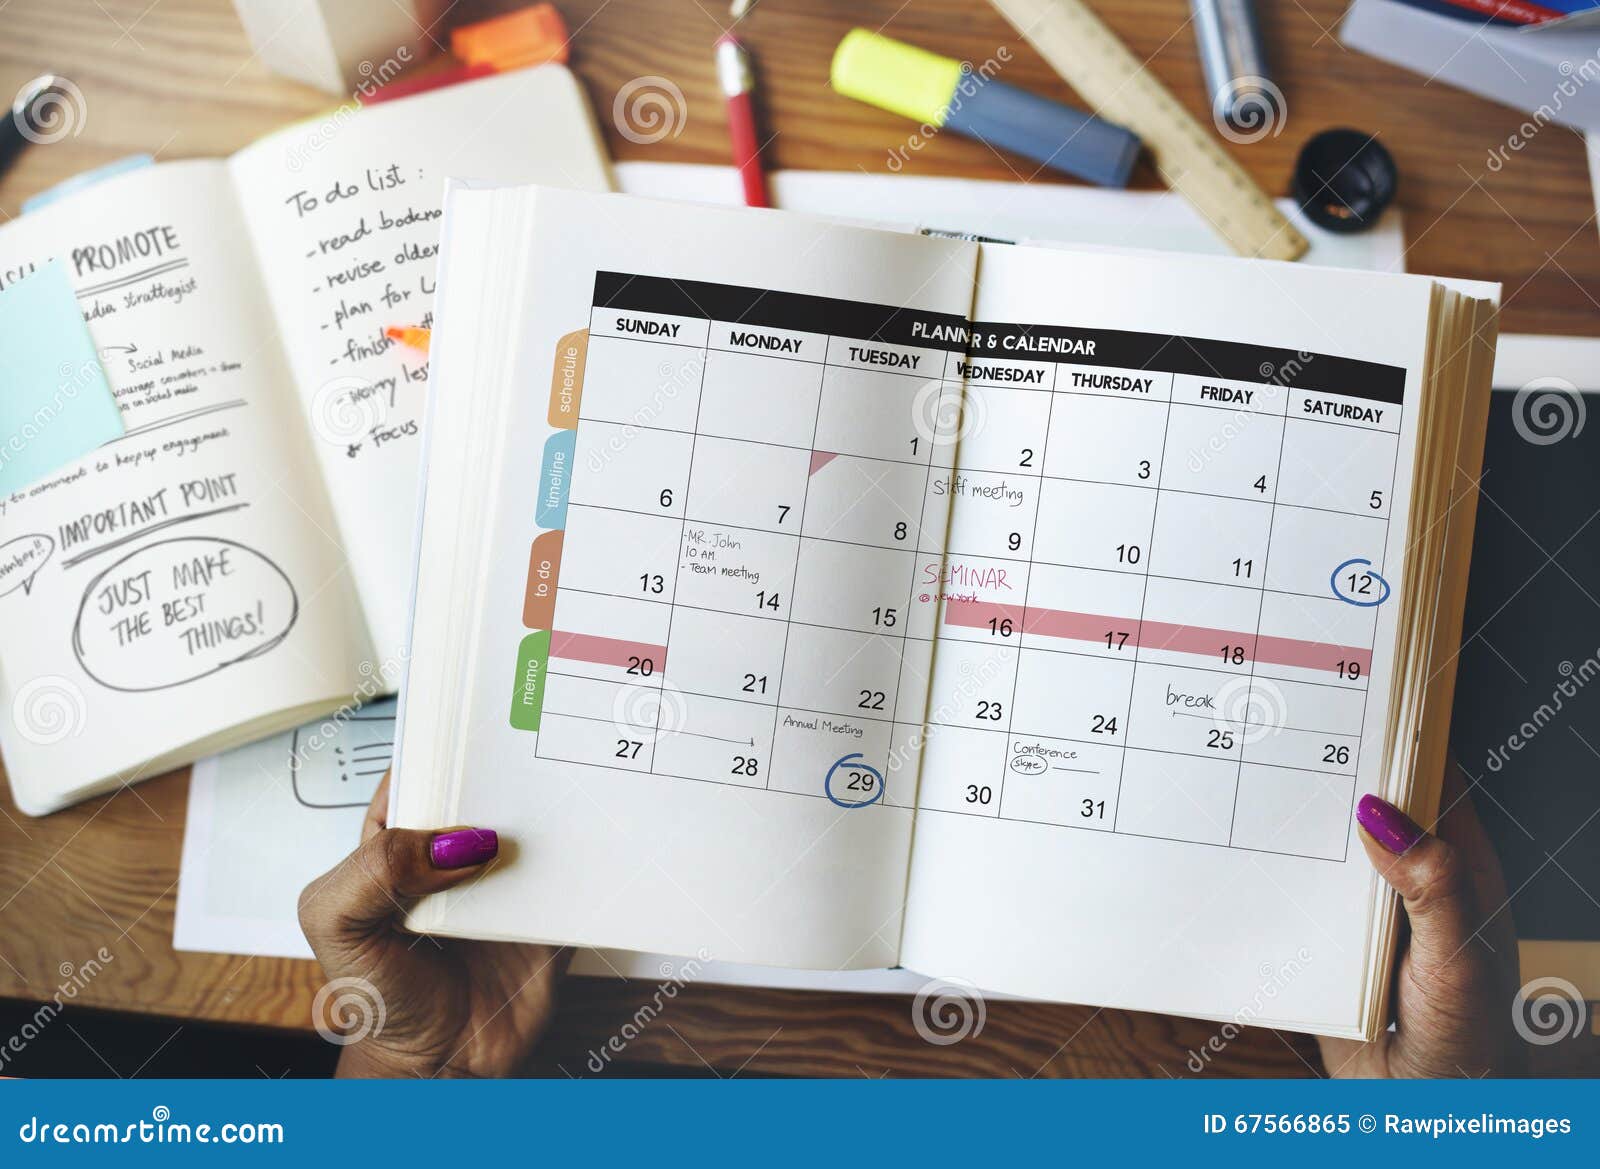 calendar planner organization management remind concept